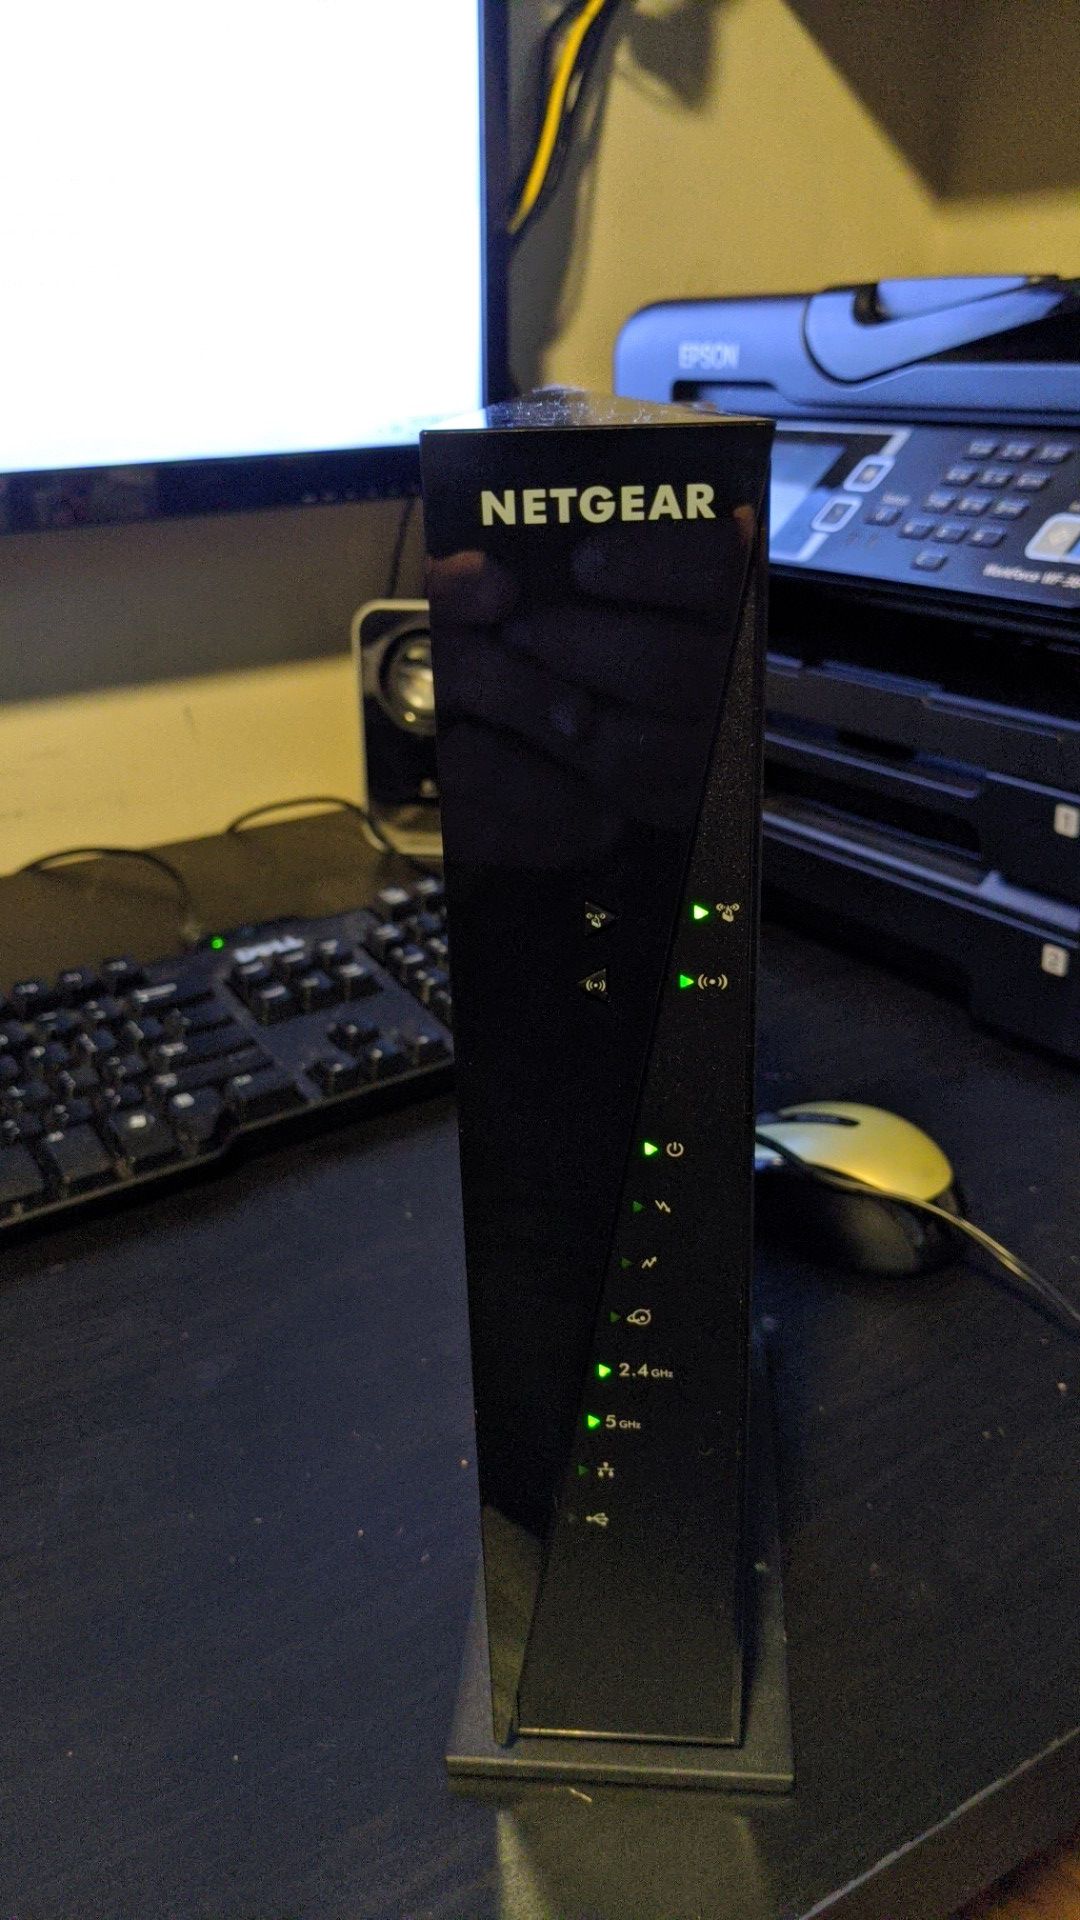 Netgear c6300 xfinity router/modem